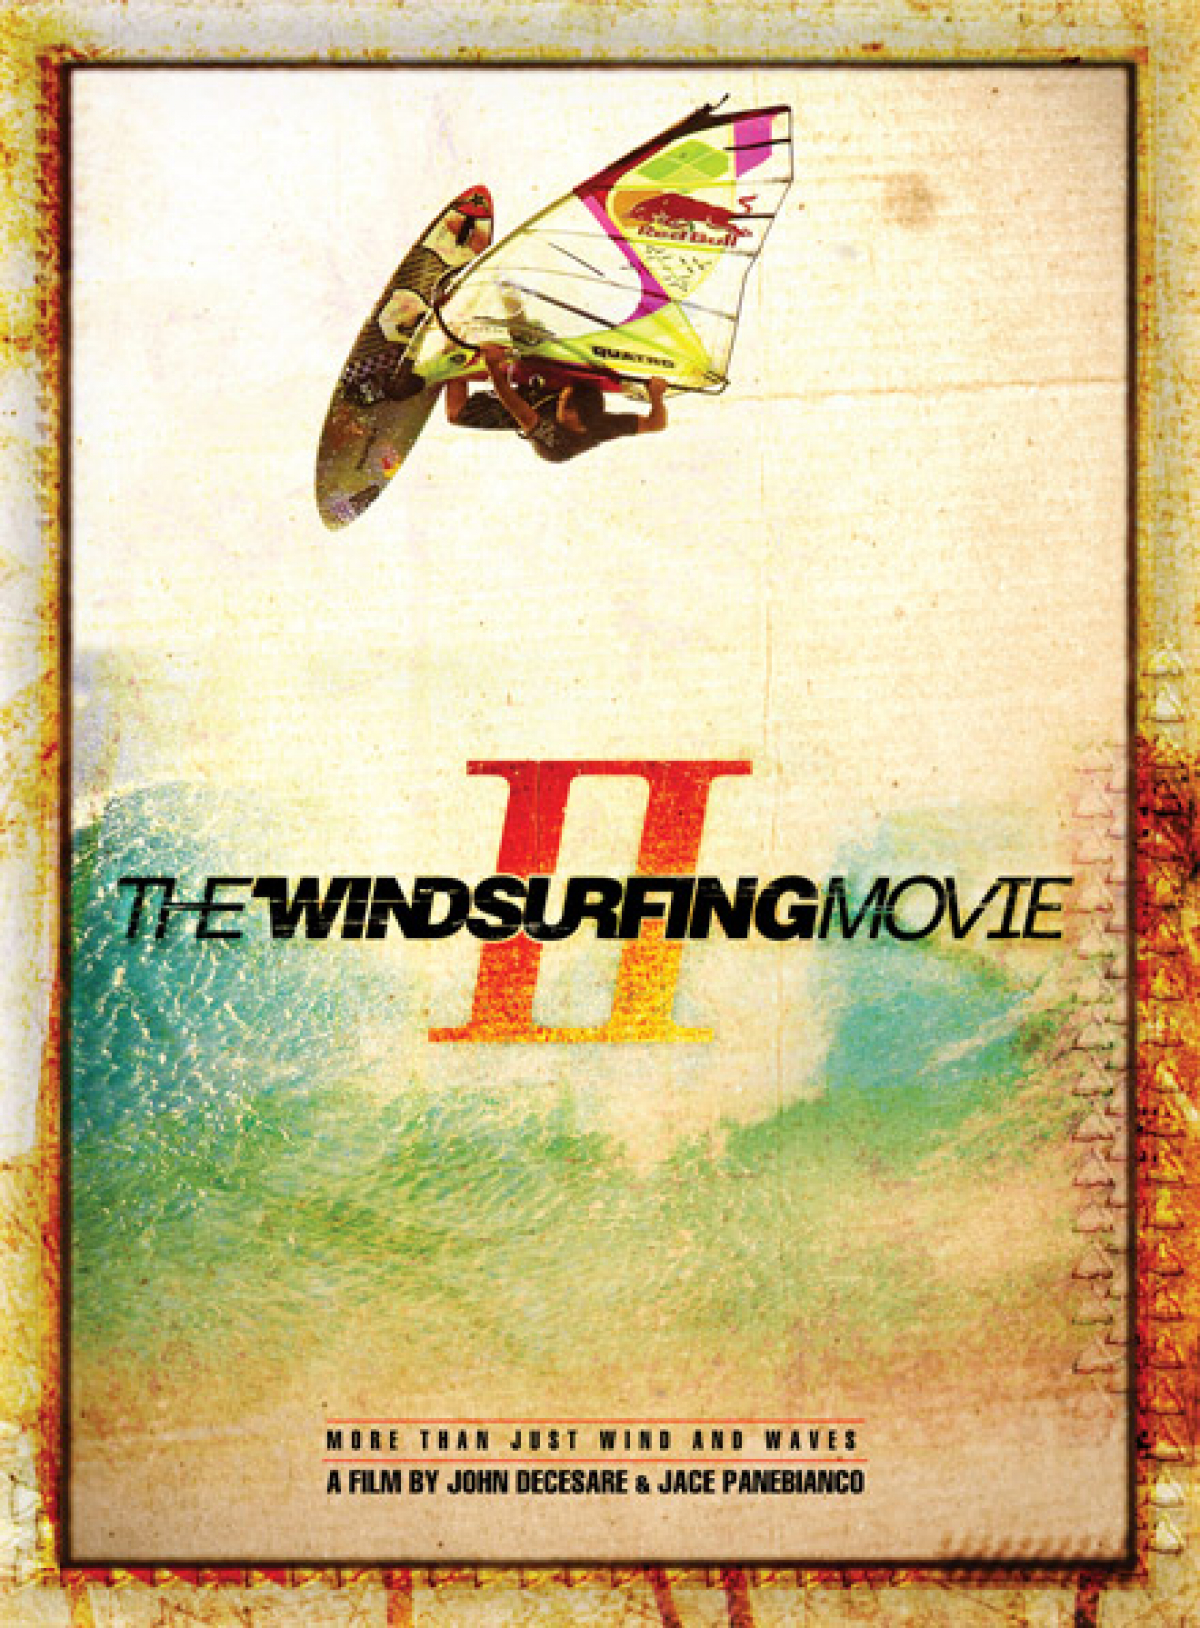 TWM2 - The Windsurfing Movie II